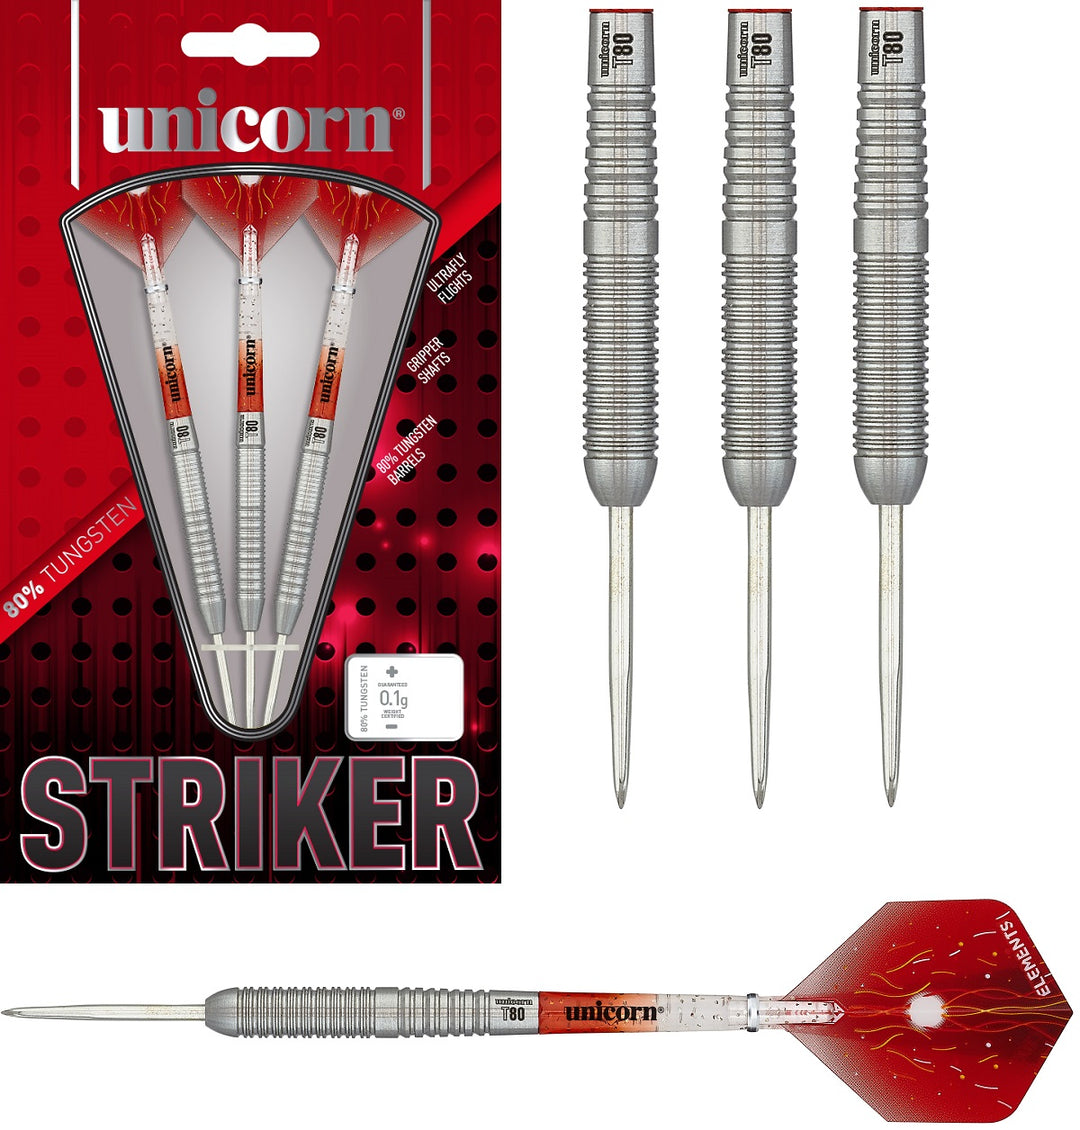 Unicorn Striker Type 6 Darts